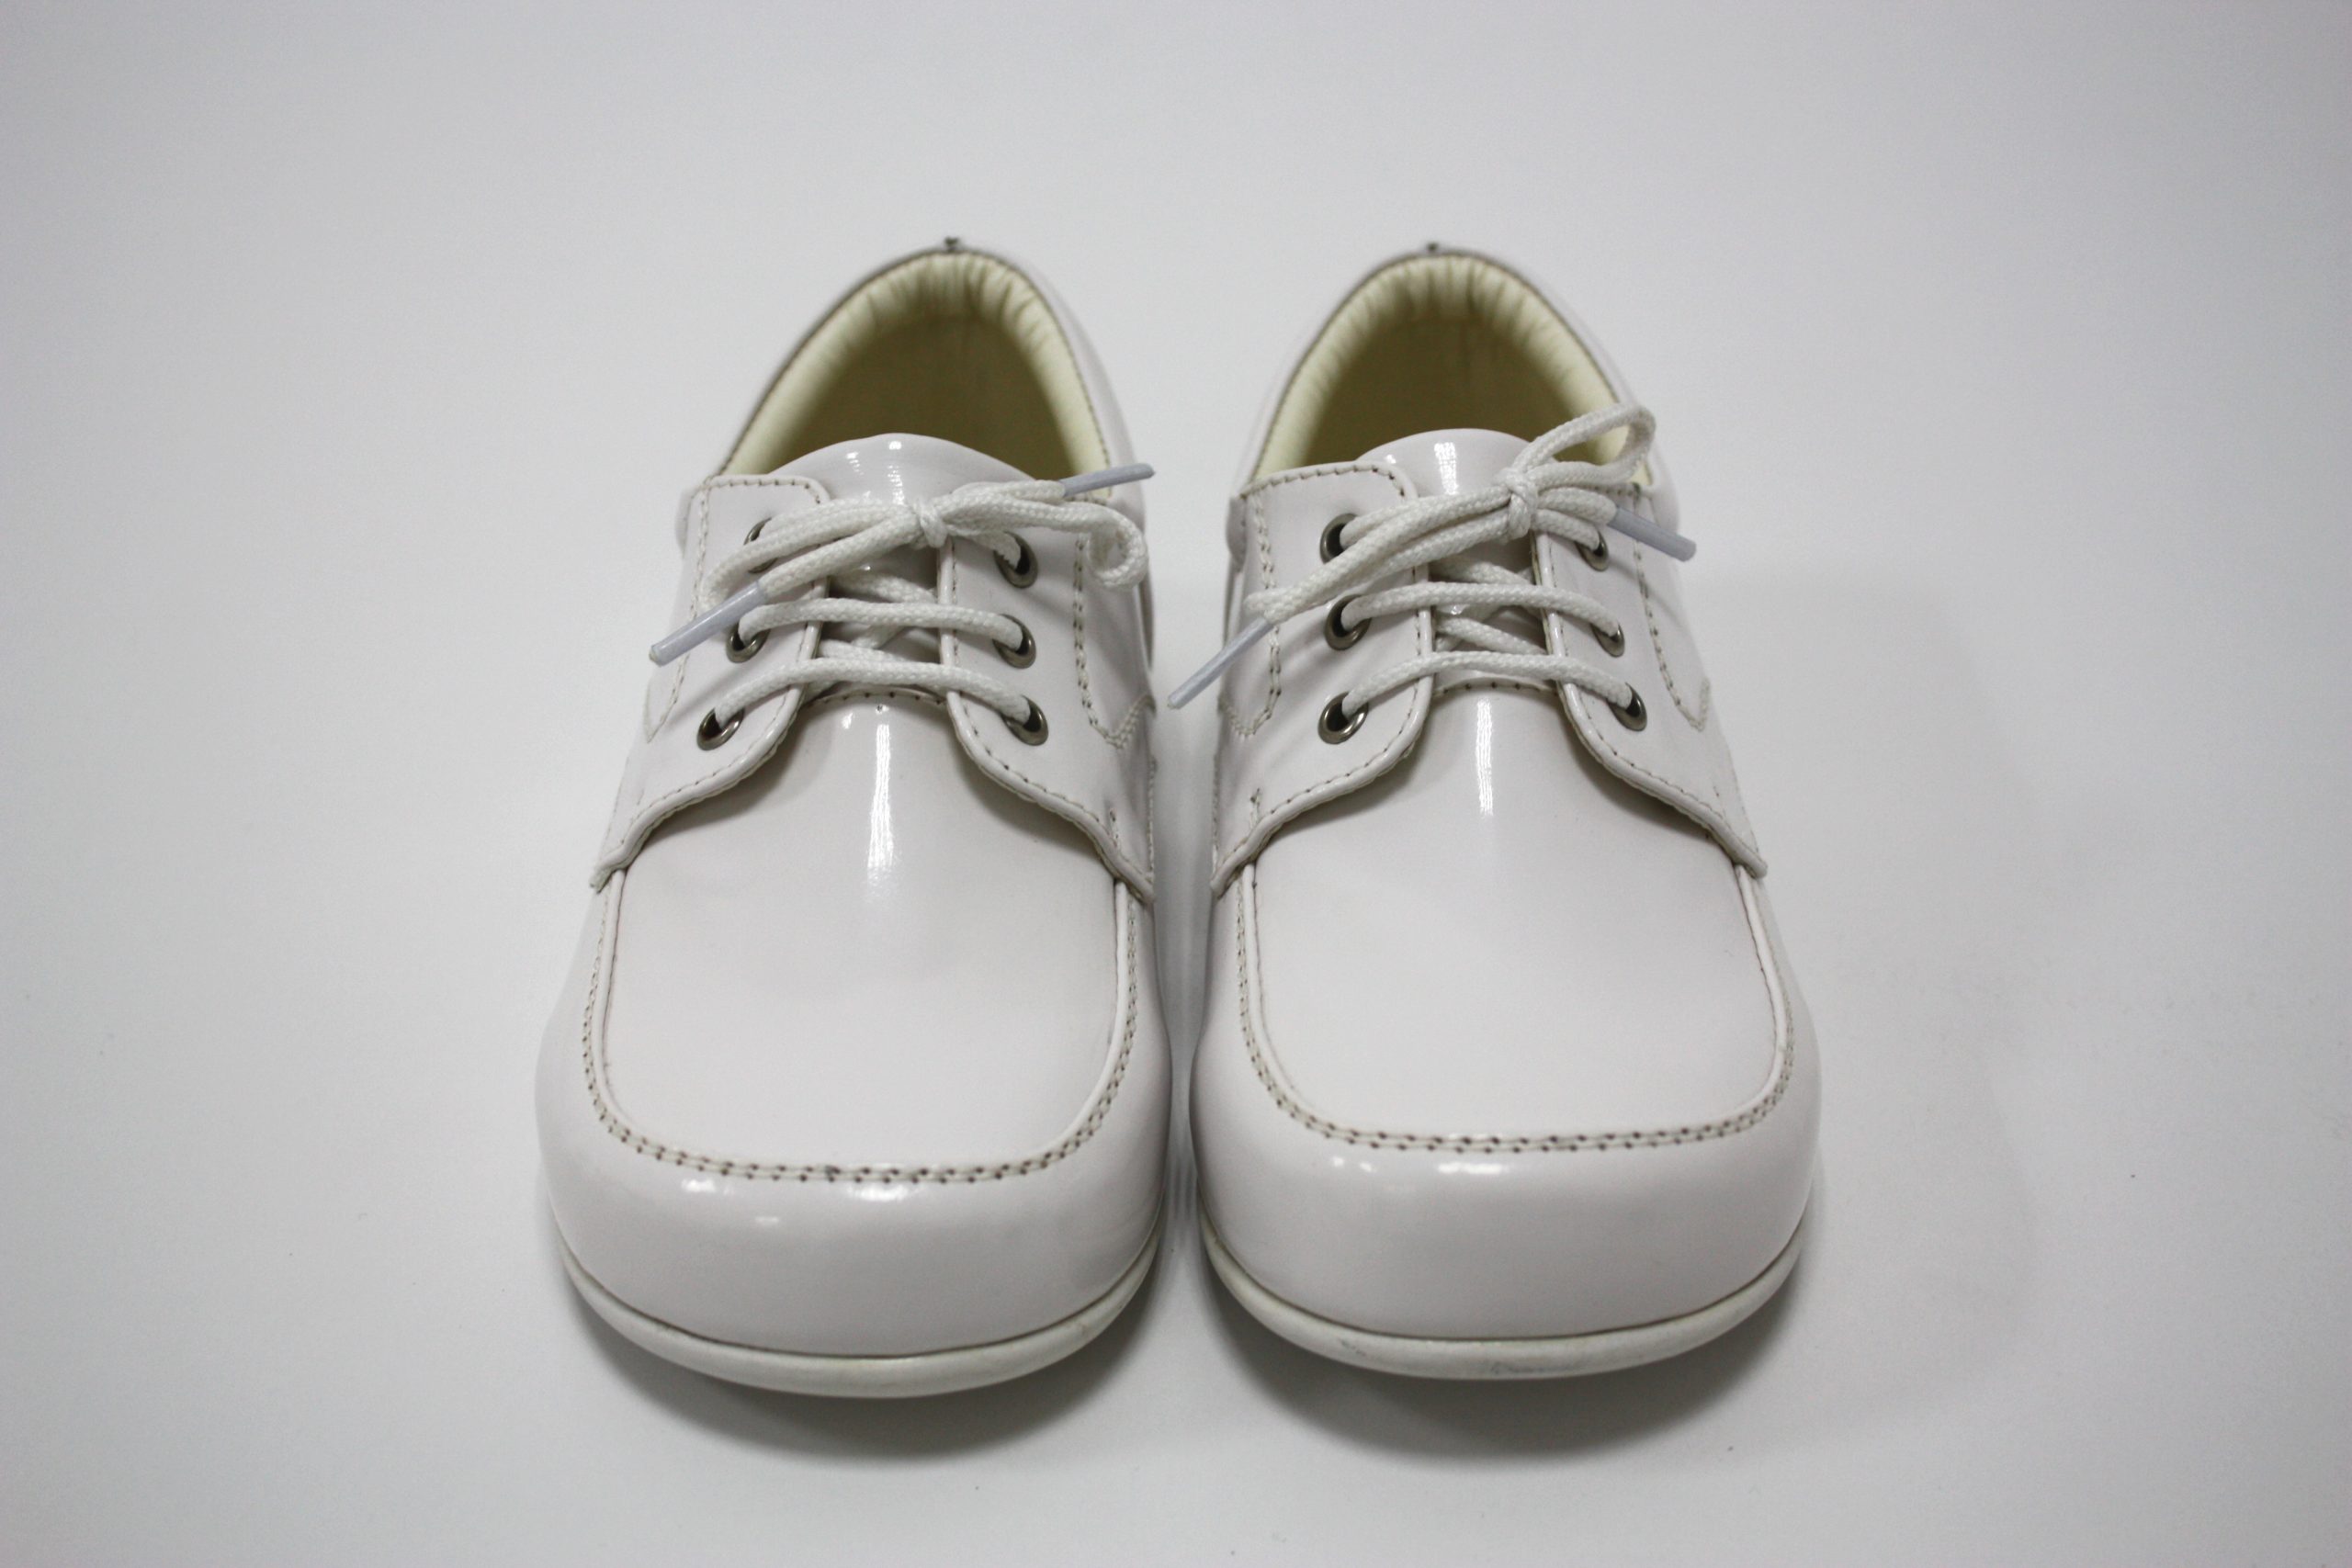 Boys Early Steps Royal Shoes in White | Little Giants Ltd